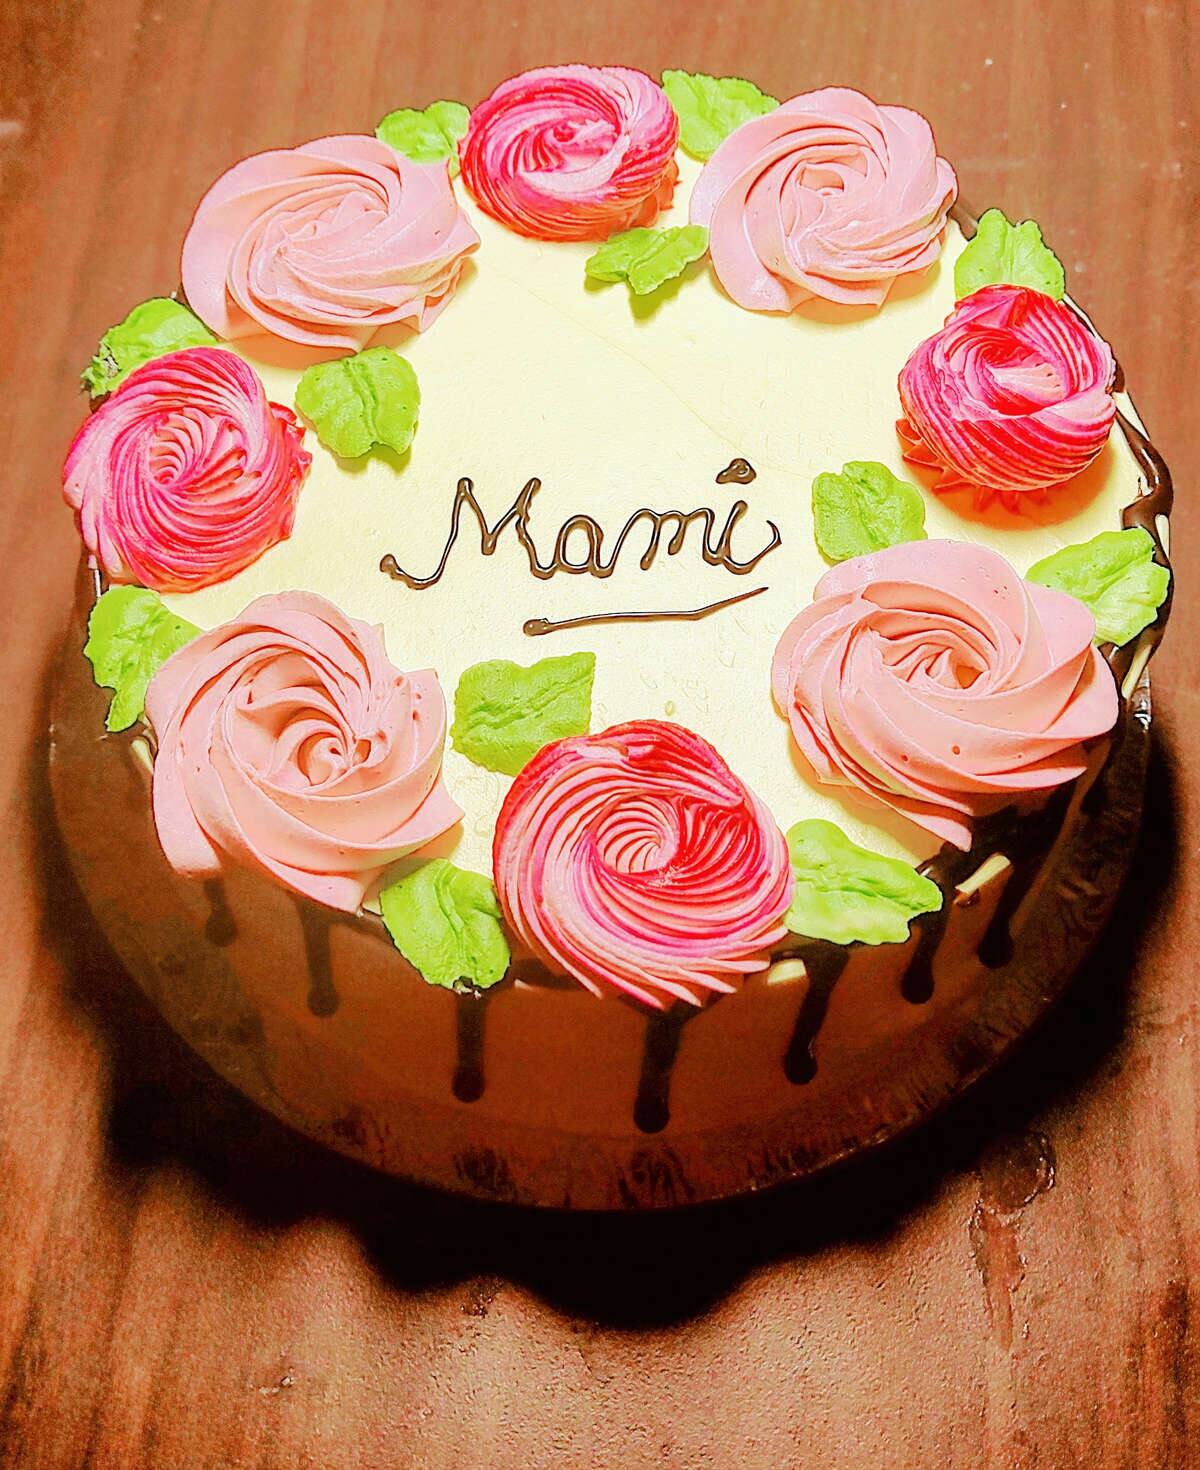 Mom's Birthday Cake - CakeCentral.com